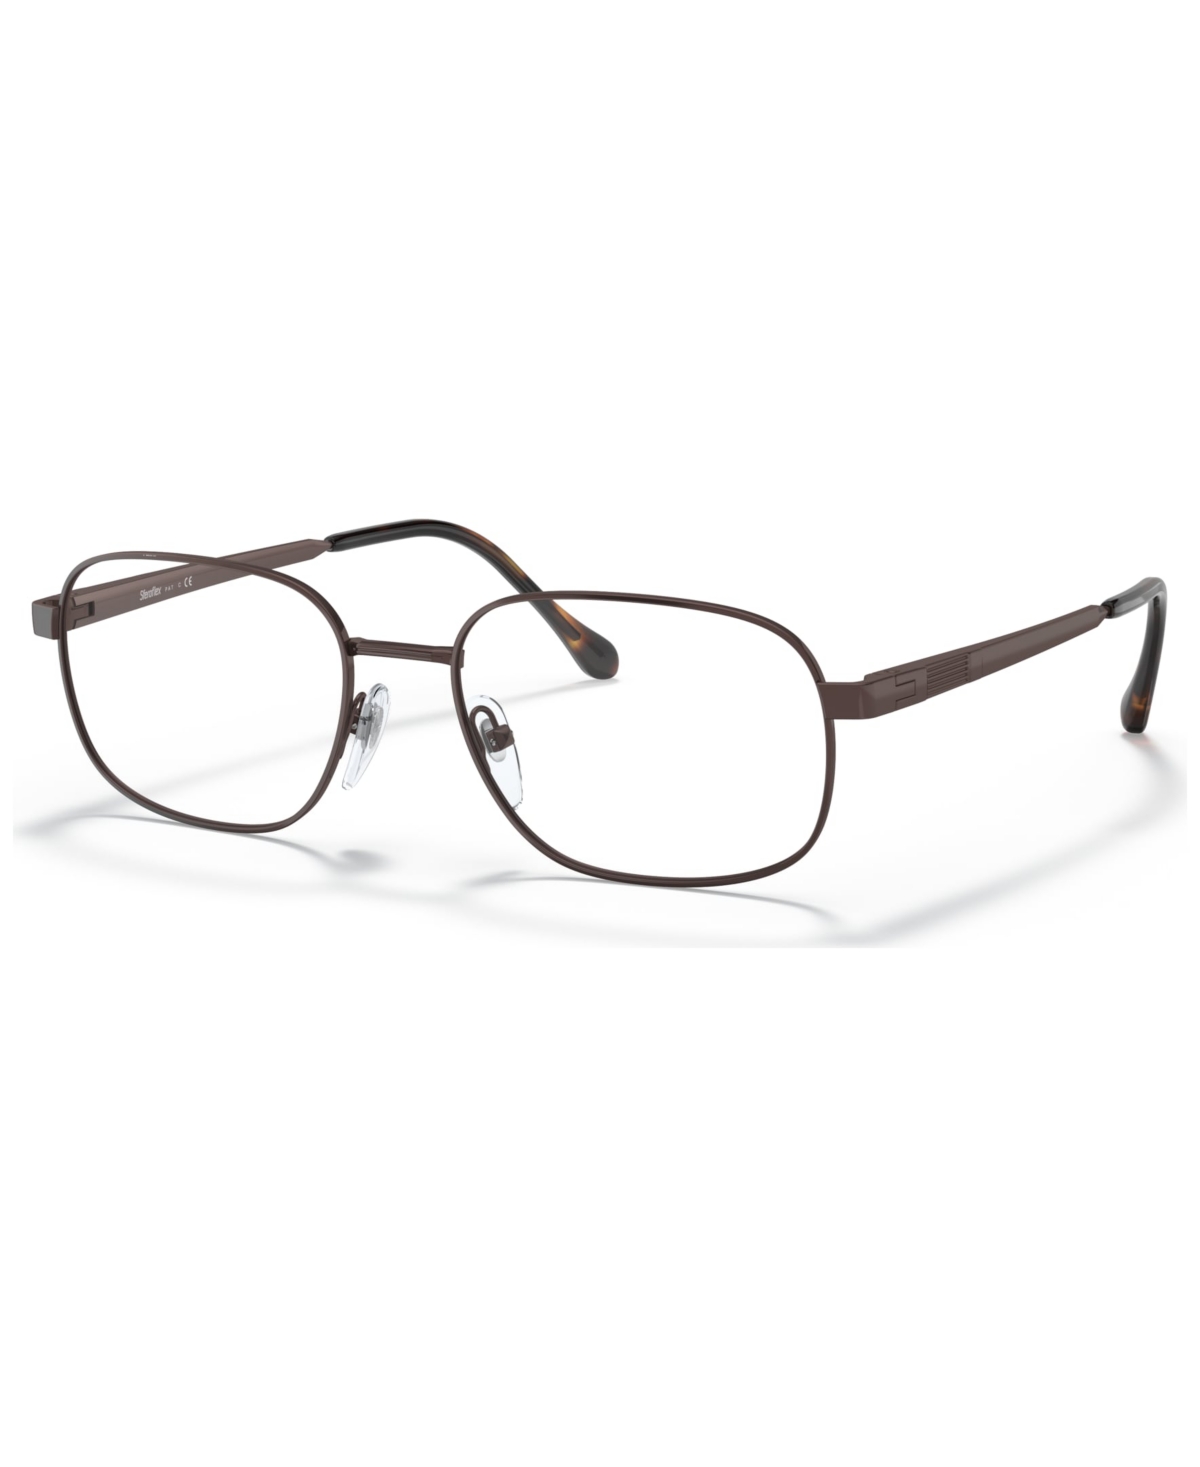 Steroflex Men's Eyeglasses, SF2294 - Shiny Black Cocoa